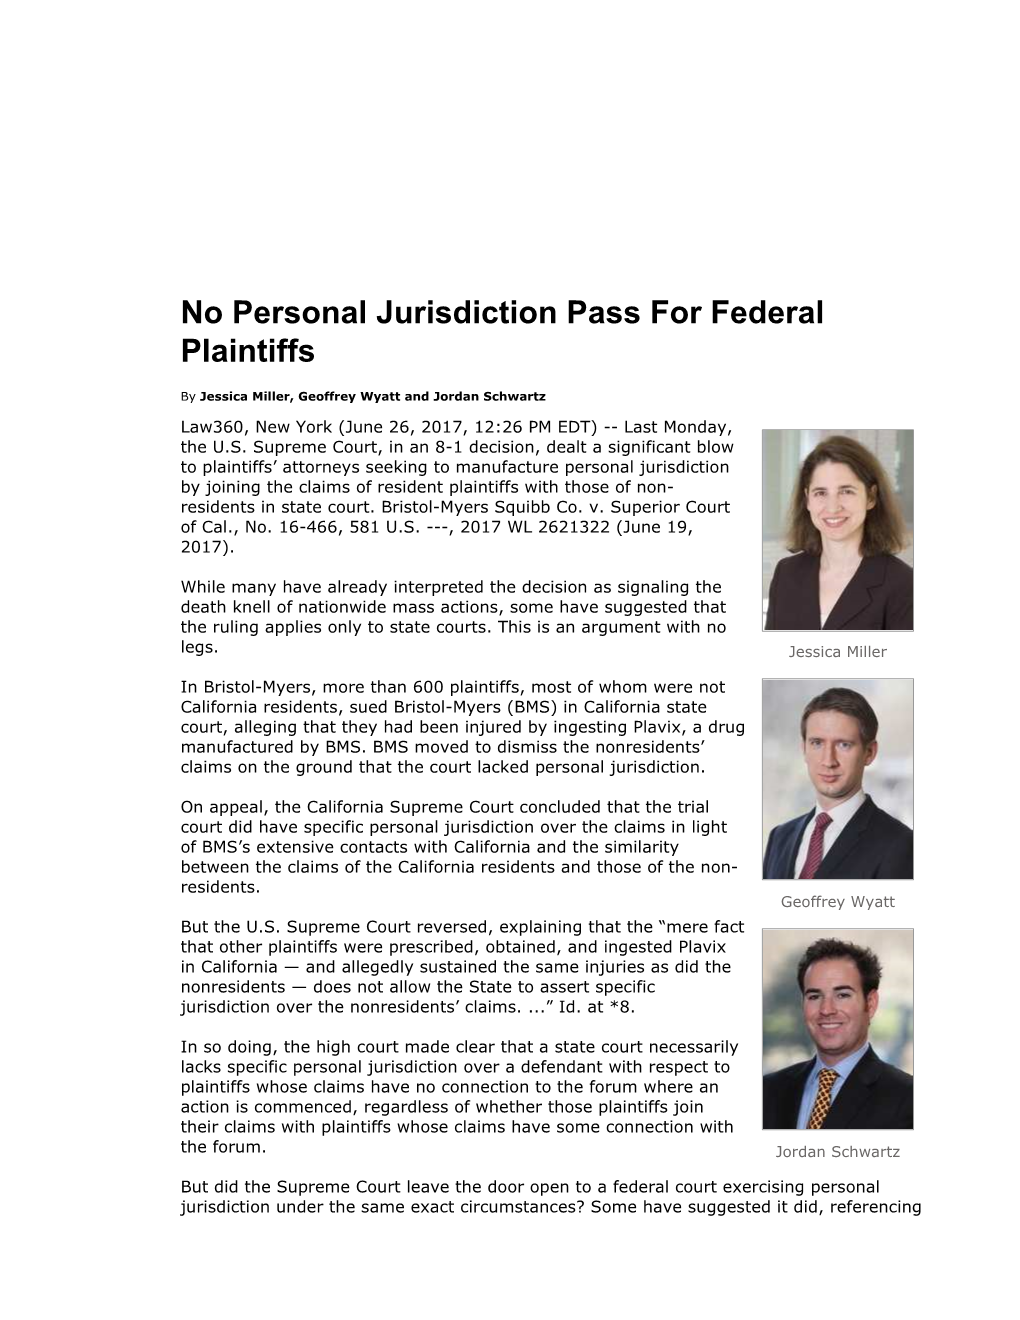 No Personal Jurisdiction Pass for Federal Plaintiffs